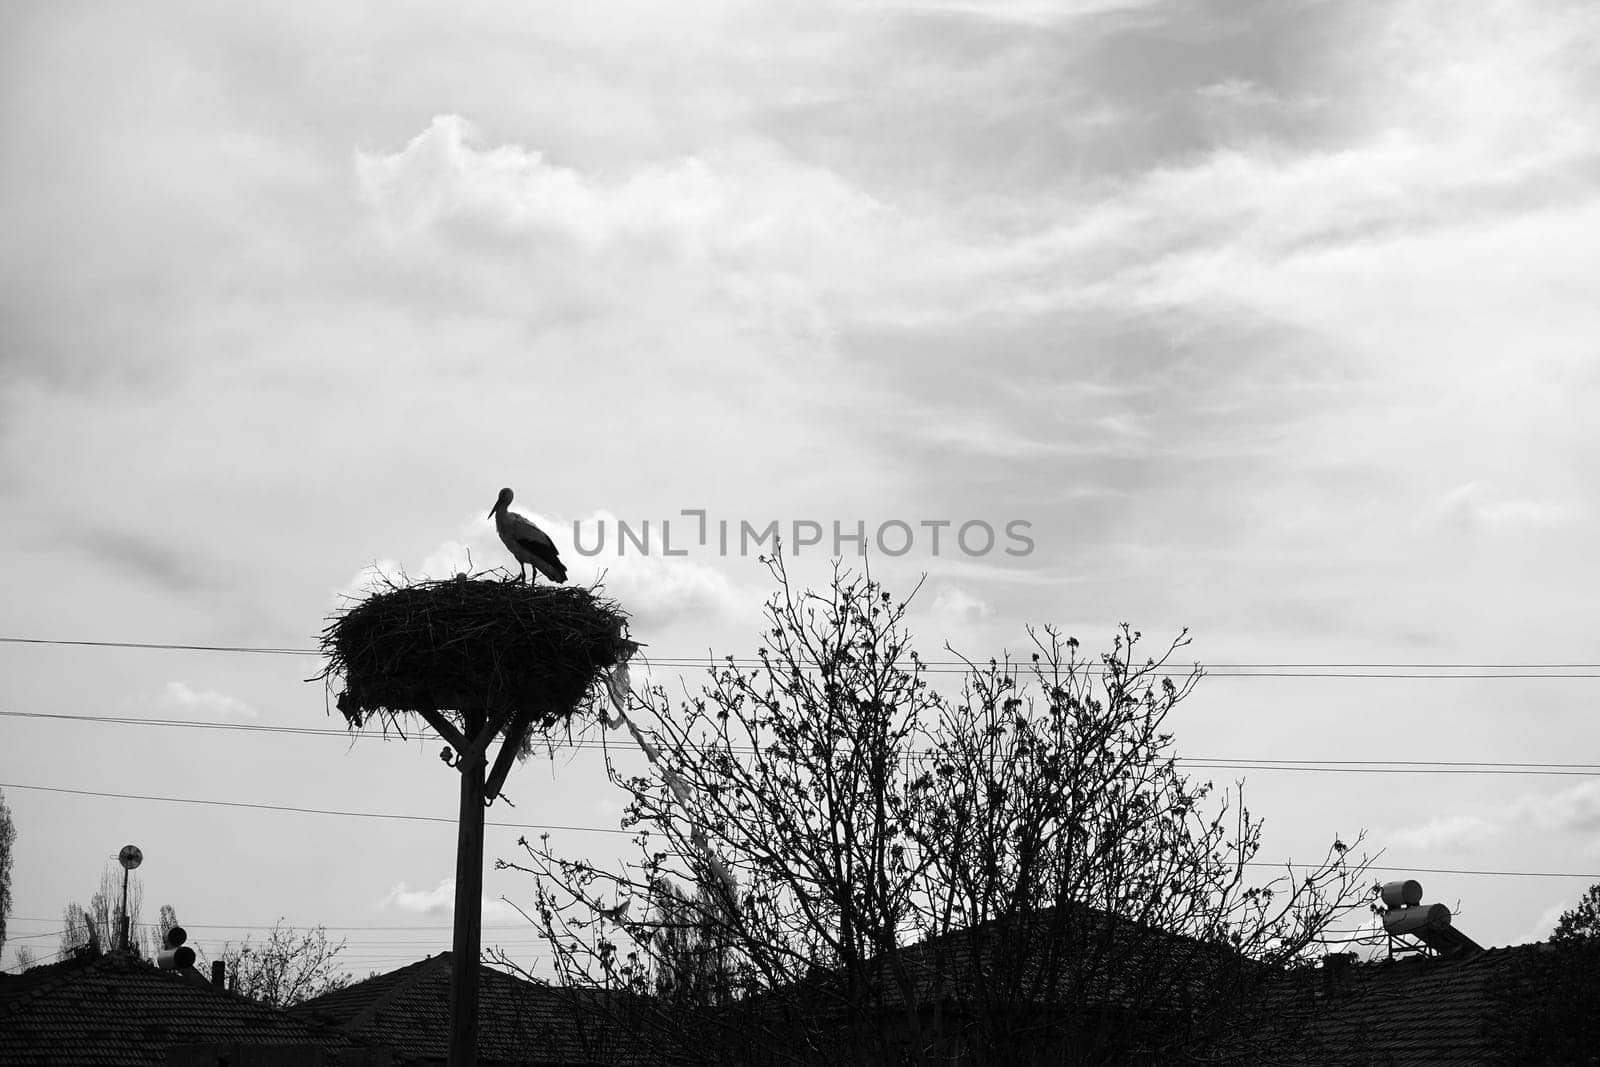 stork silhouette in stork's nest at night, stork silhouette shot, by nhatipoglu